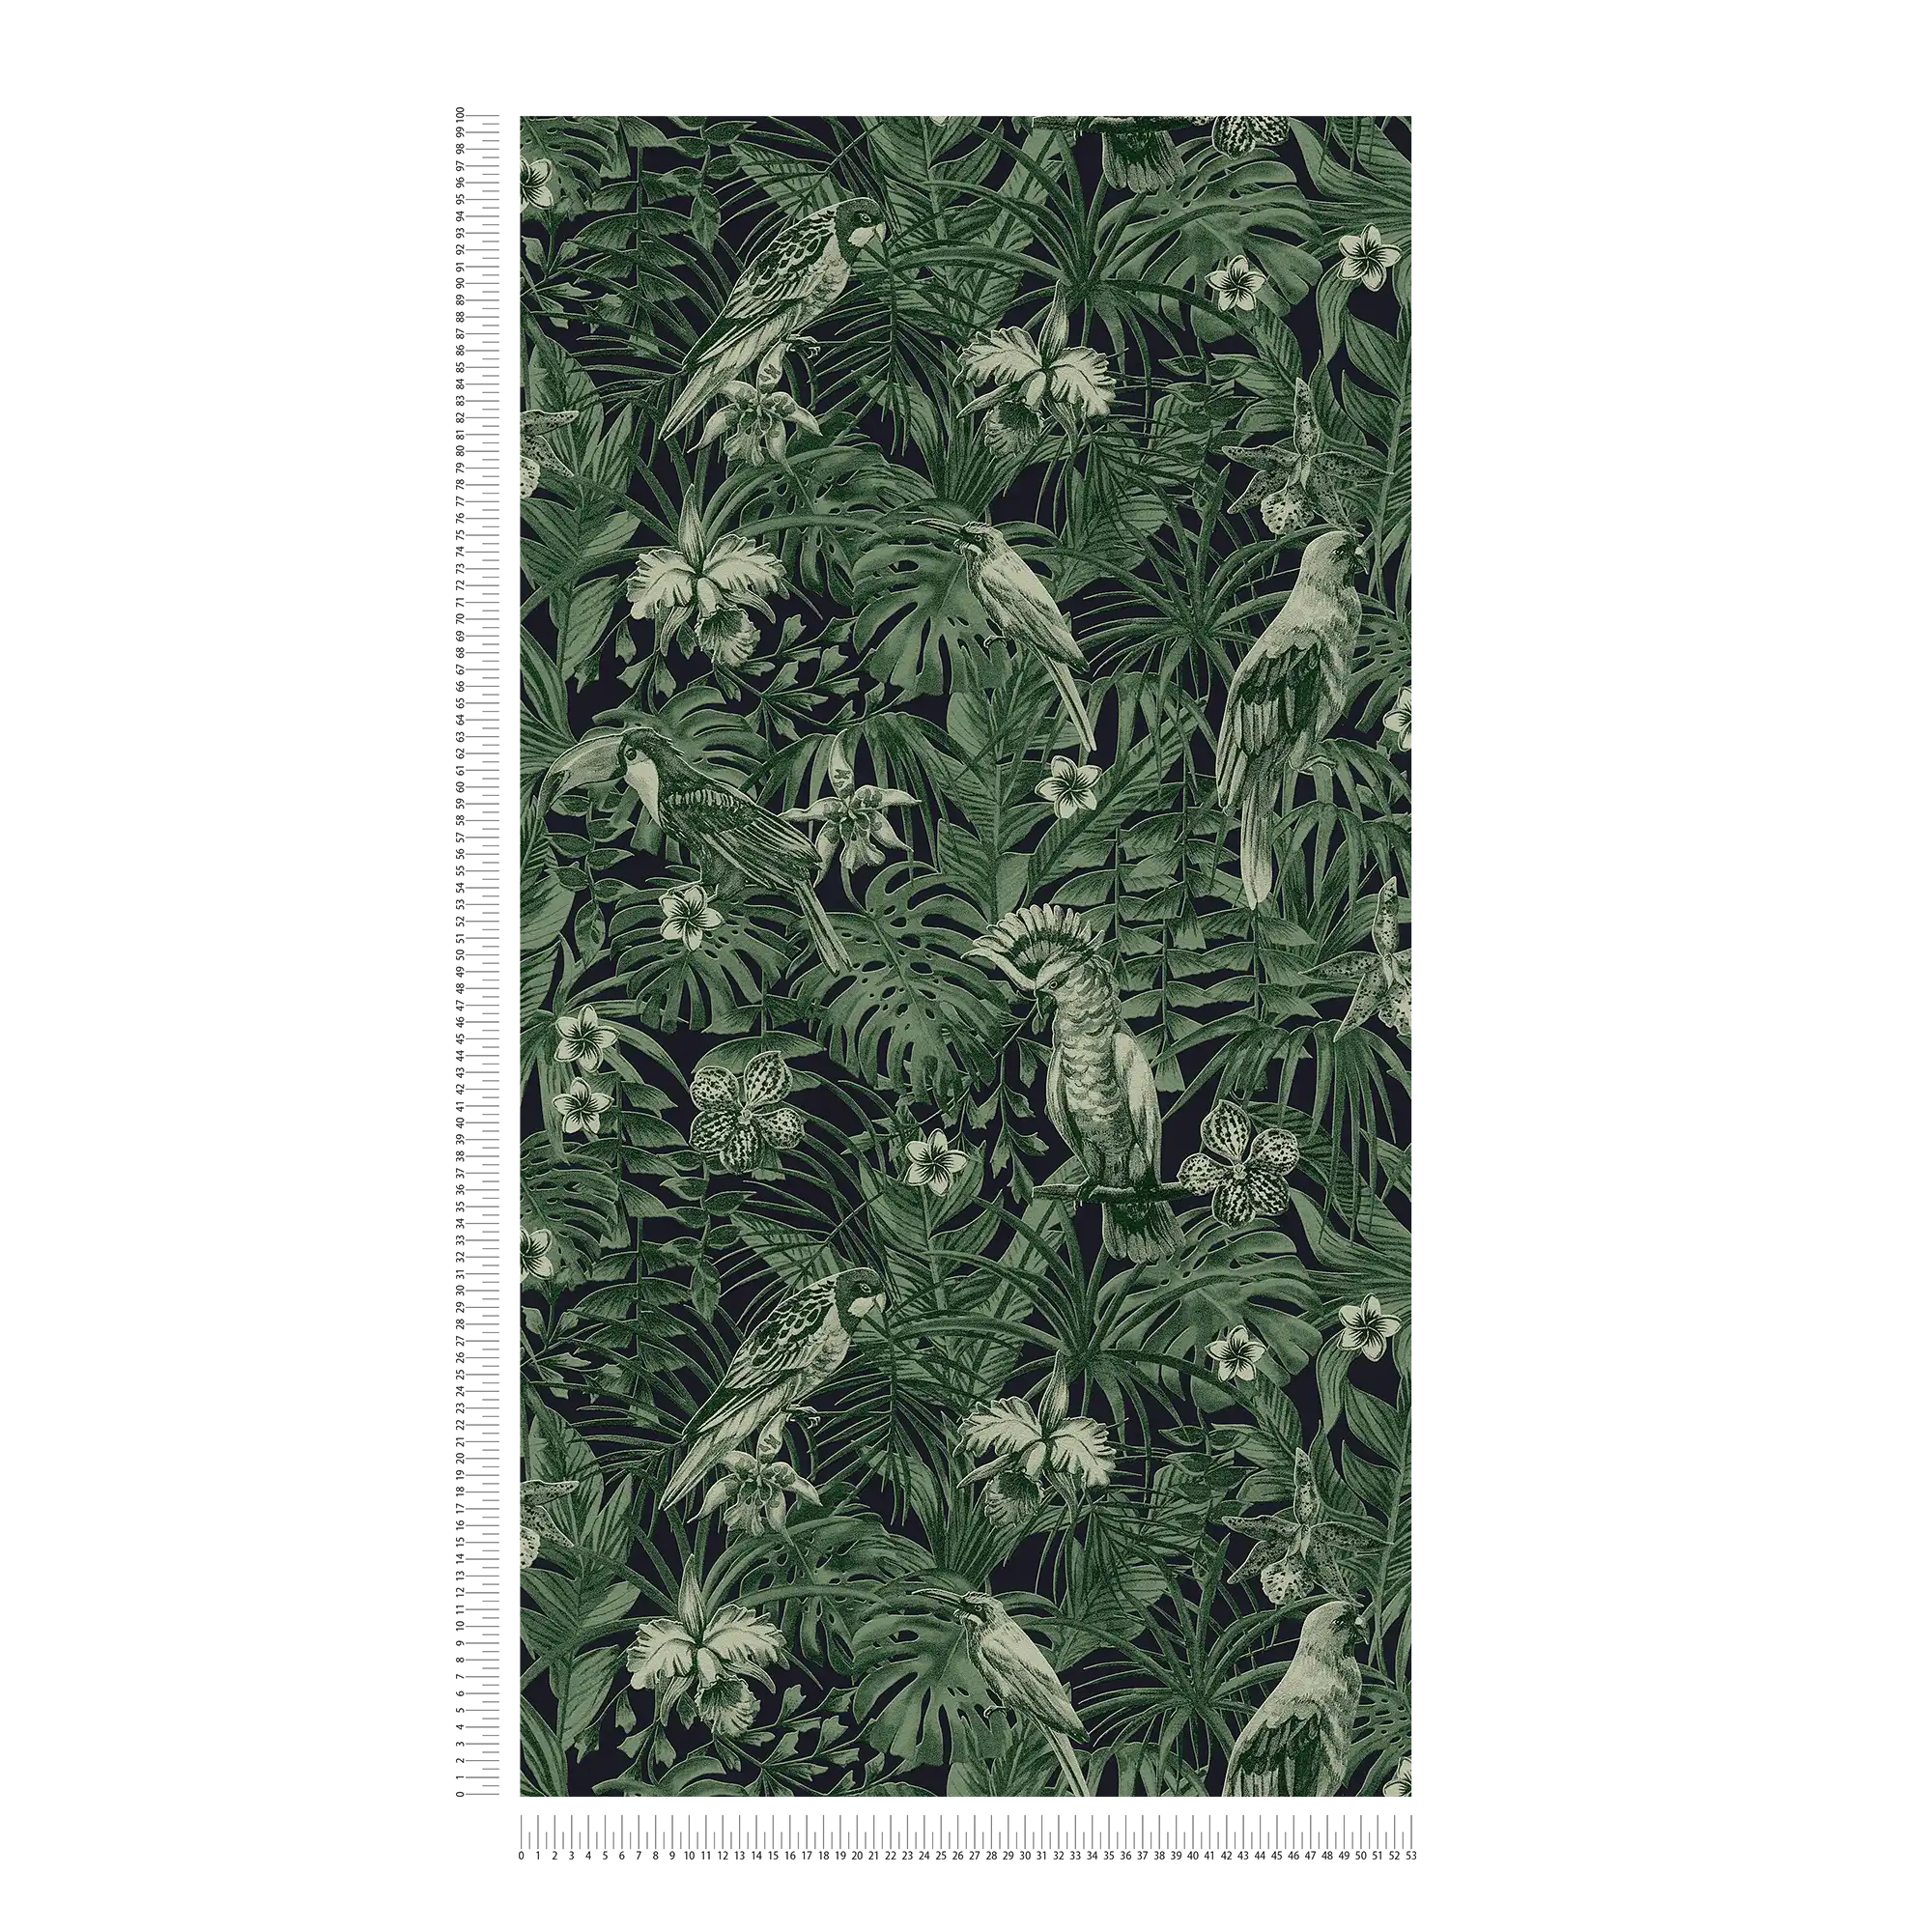             Wallpaper tropical birds & exotic flowers - green, black
        